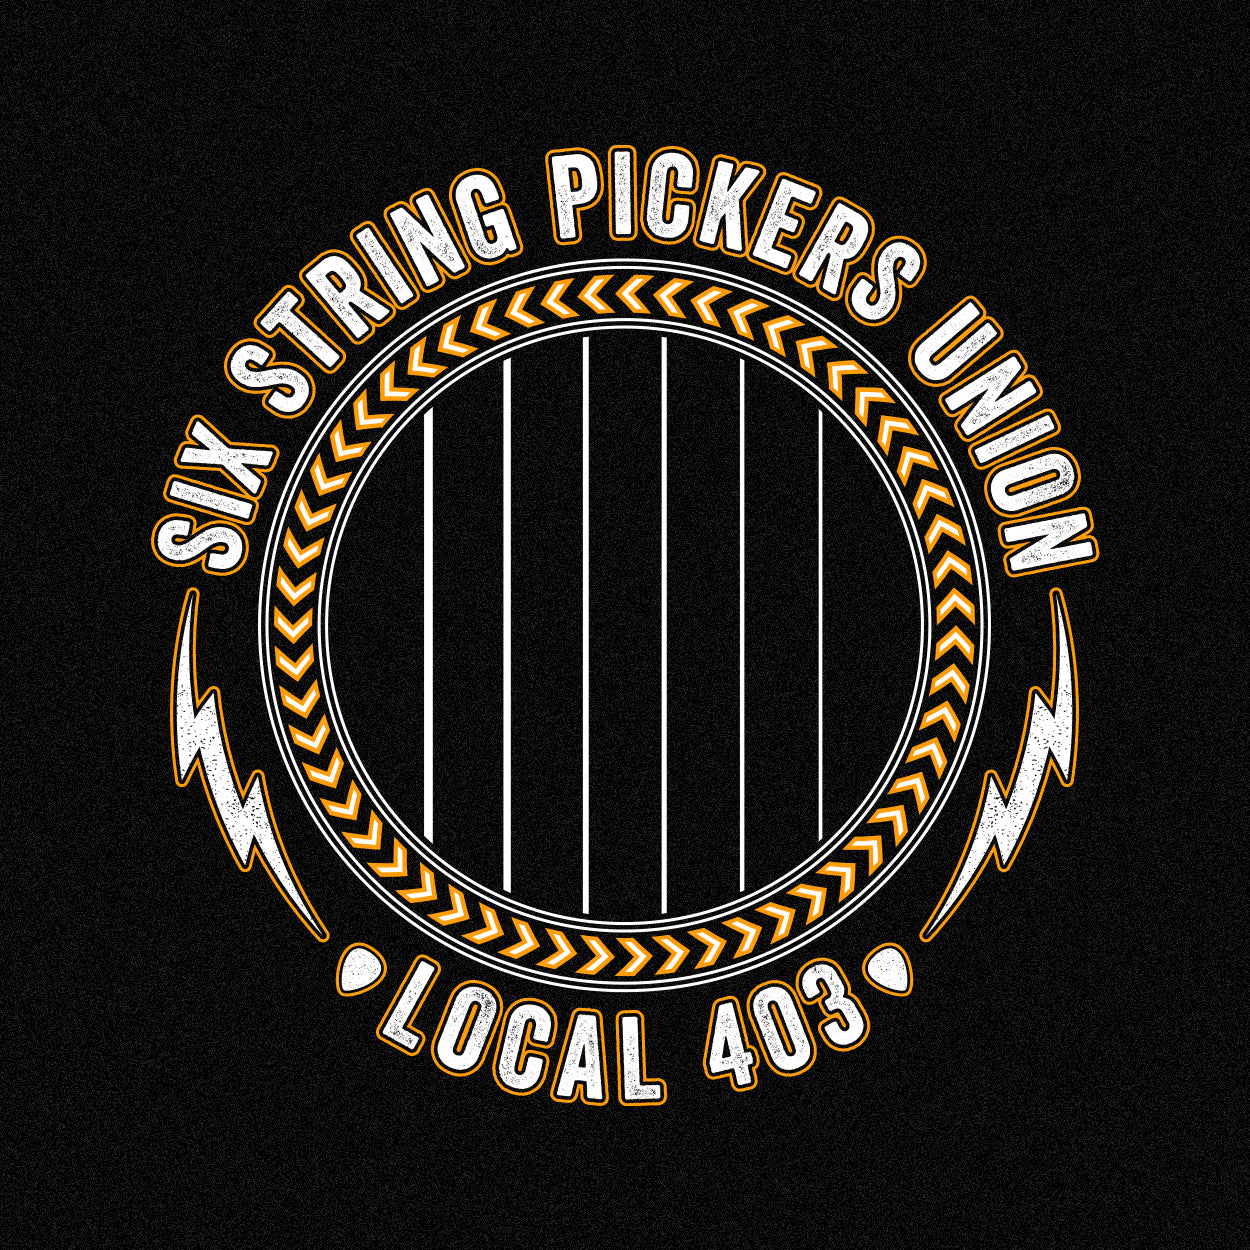 Pickers Union